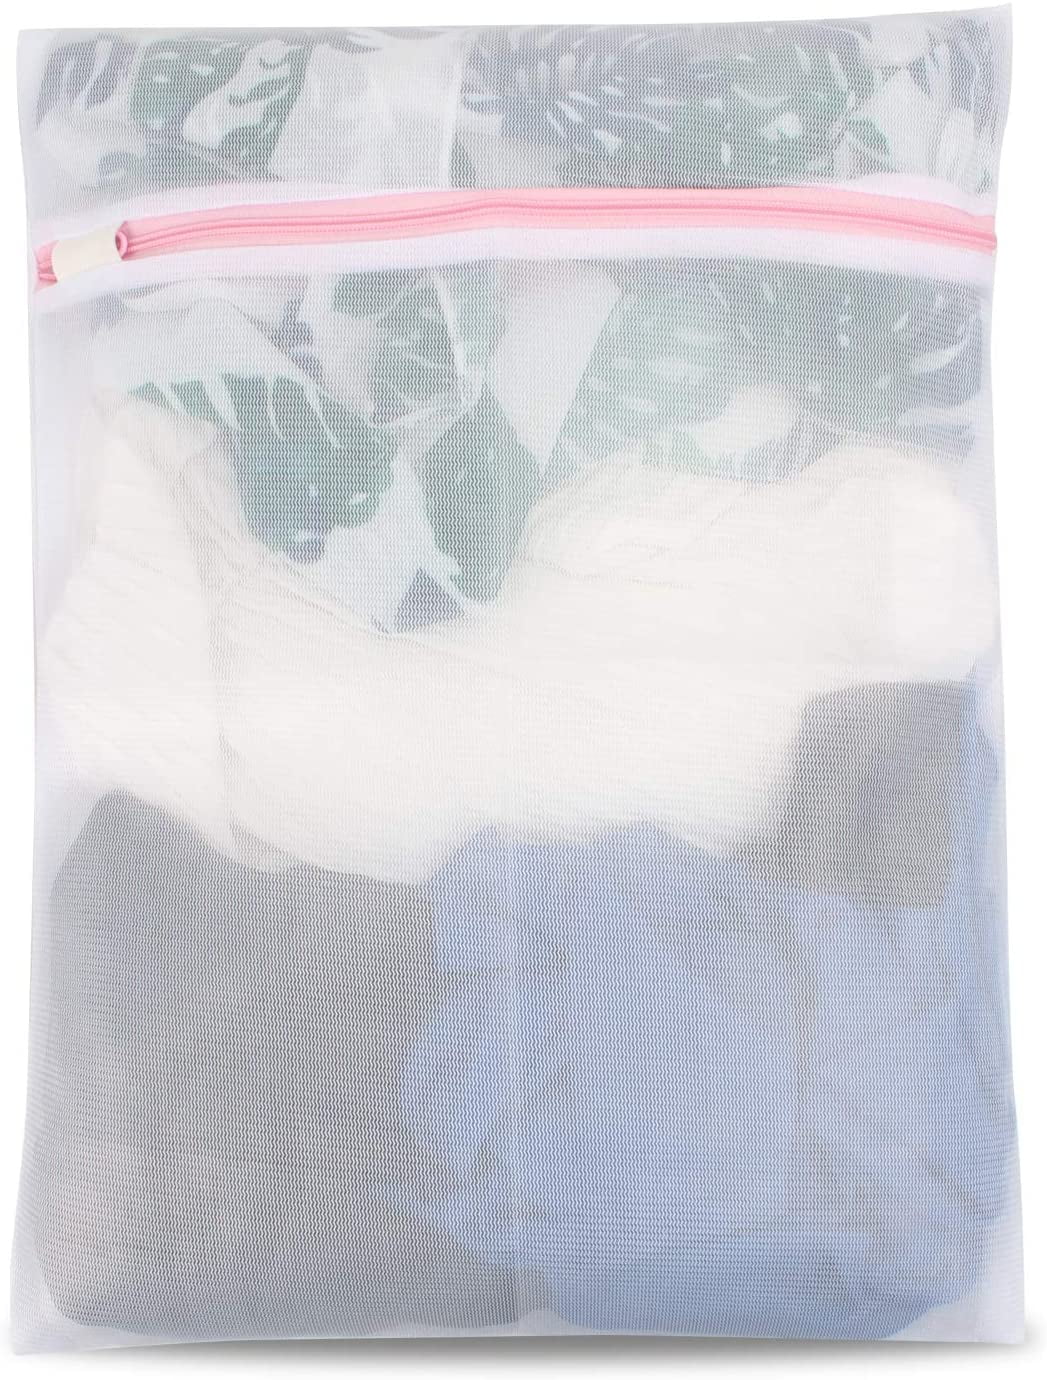 Mesh Washing Machine Zip Laundry Bag 12"x15" Safe Delicates,Hose Bras,Underwear 